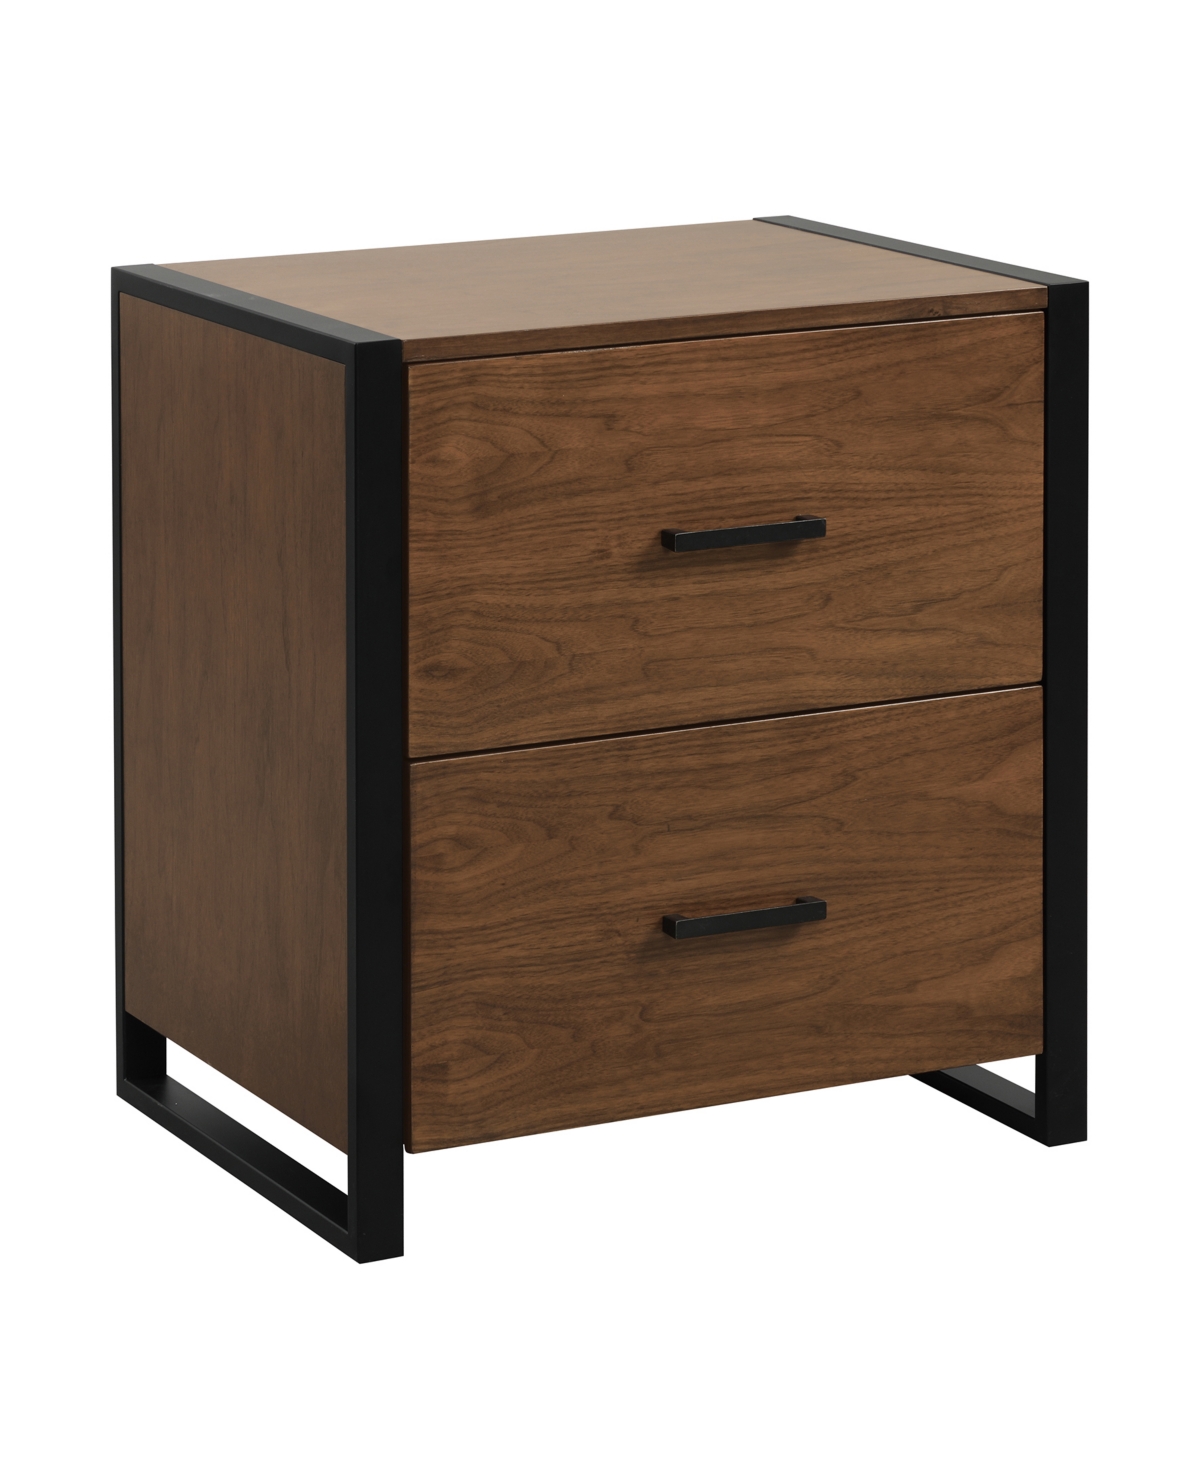 Furniture Helena File Cabinet In -tone Finish- Walnut And Rustic Black Me